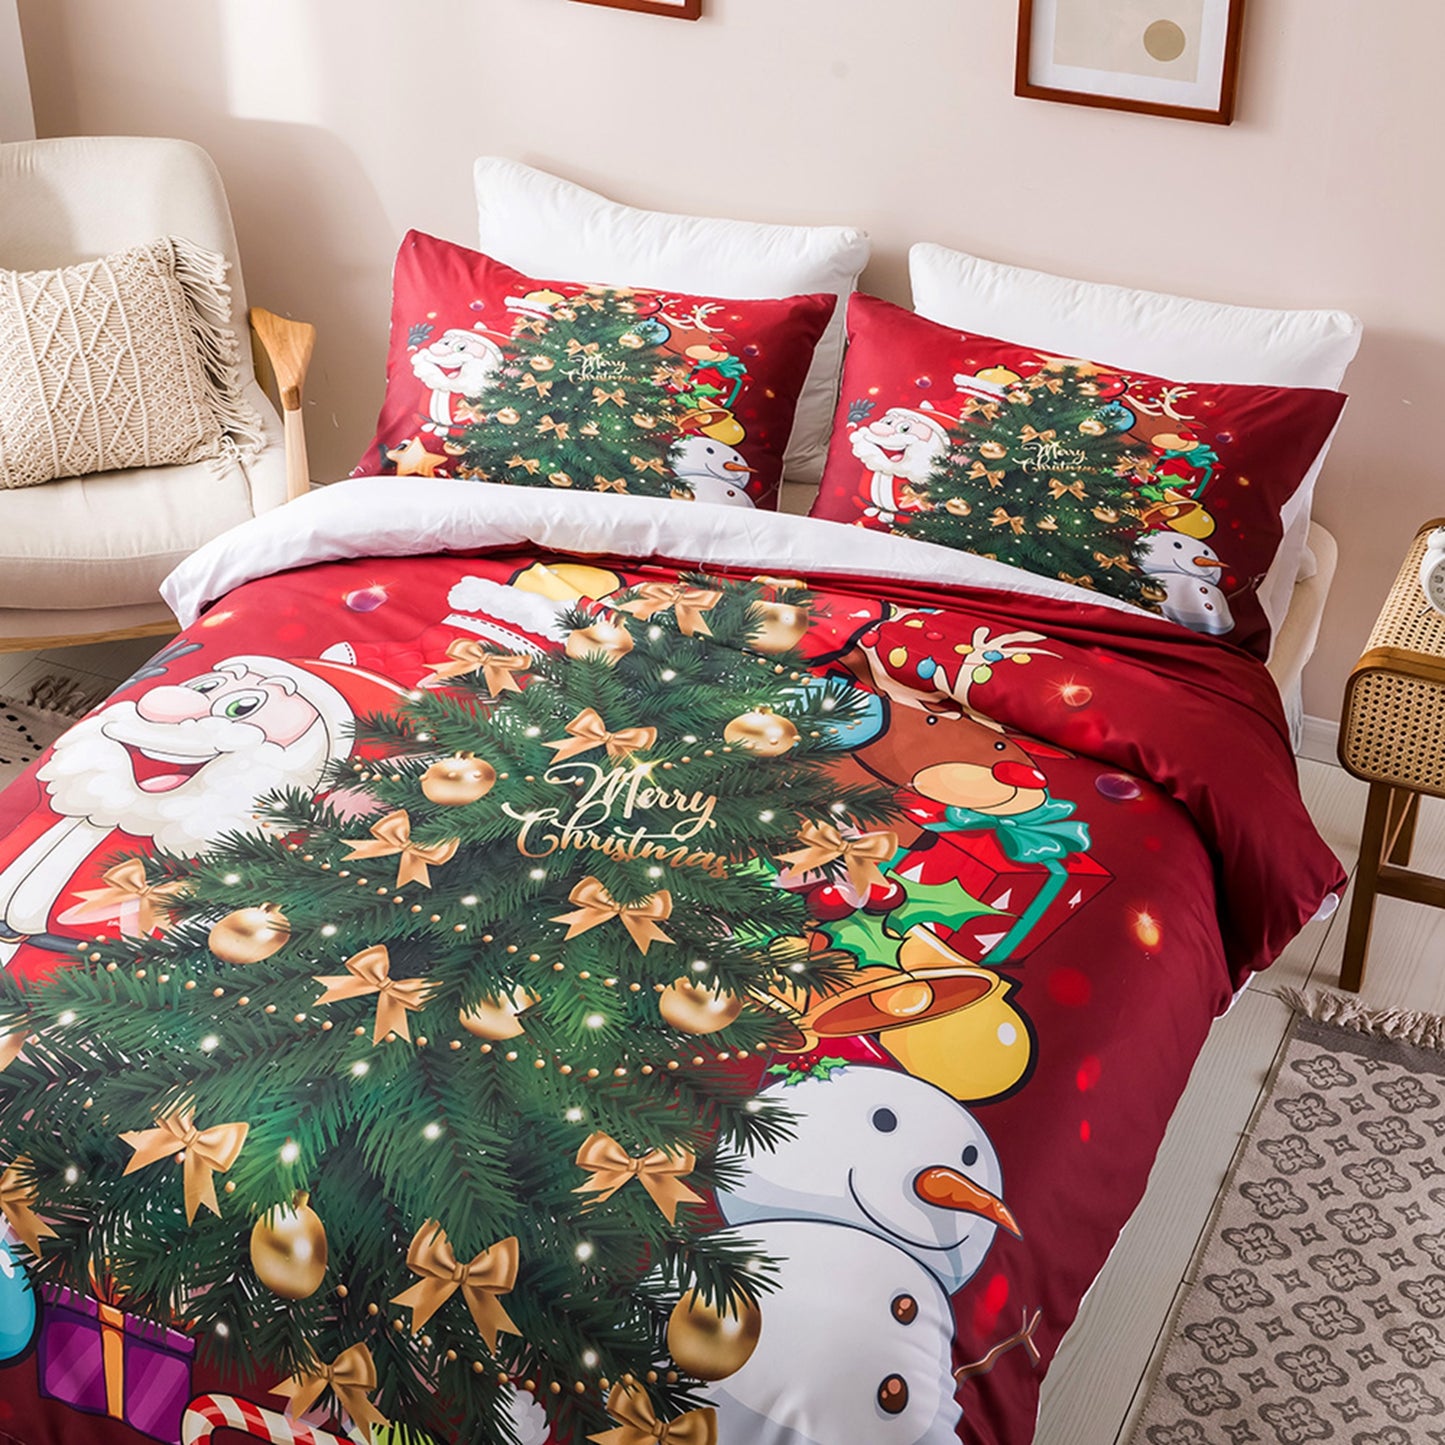 Christmas Dress Up Santa With Christmas Tree Duvet Cover Set